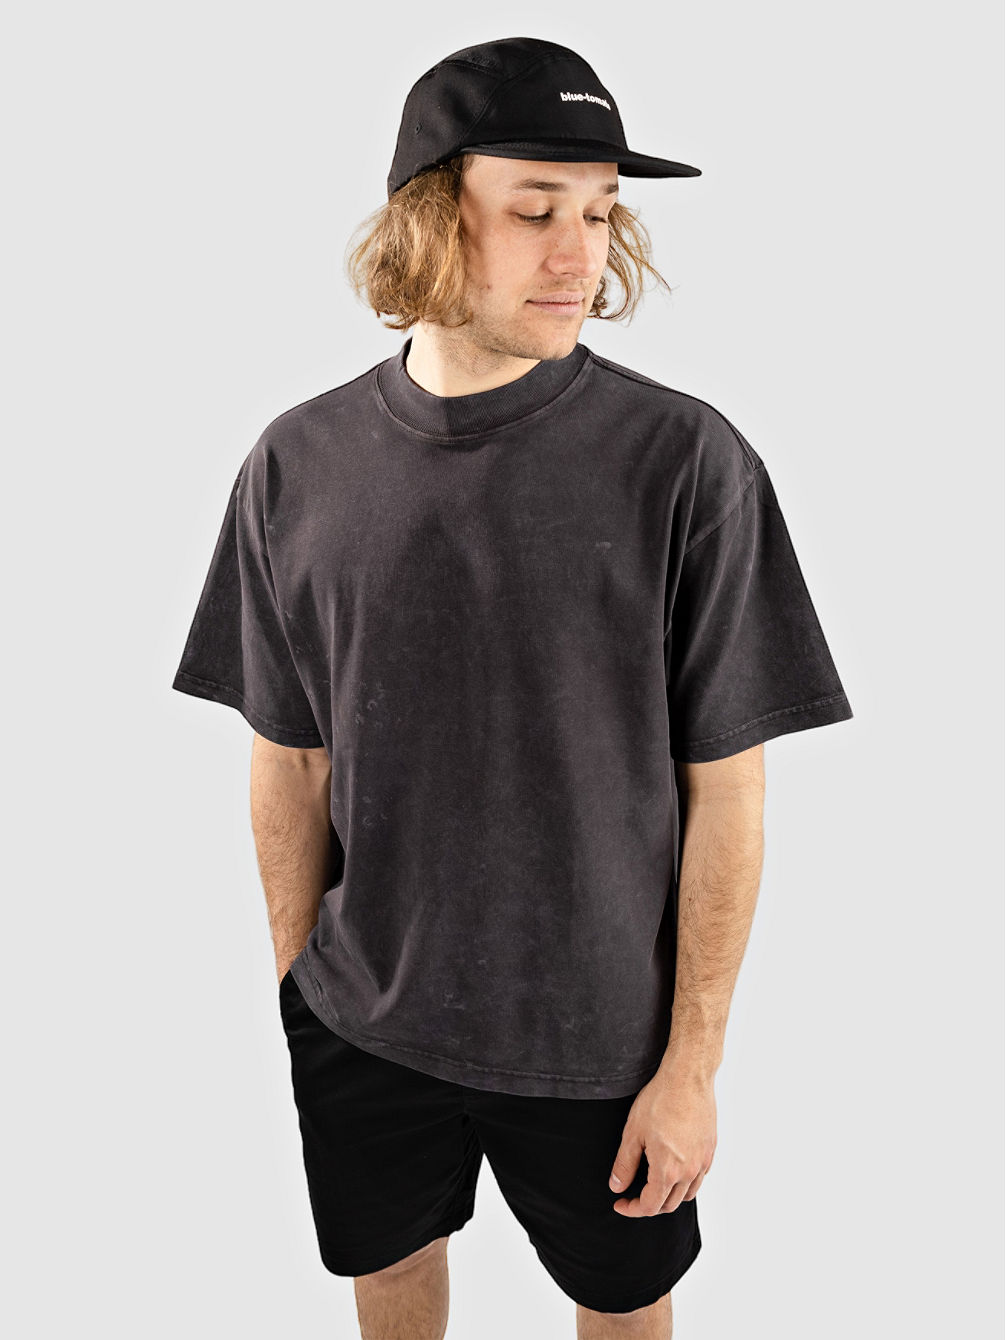 9.0 Oz Garment Dye Designer Camiseta